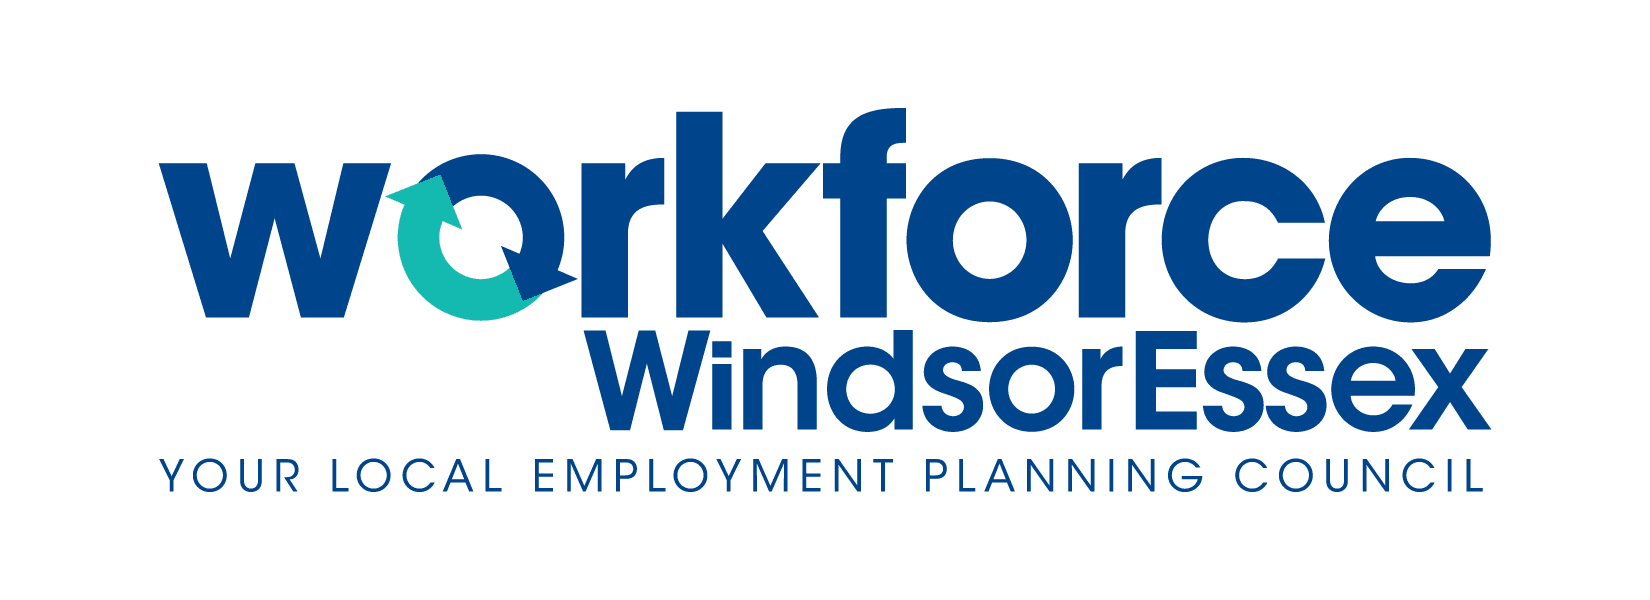 Workforce Windsor Essex